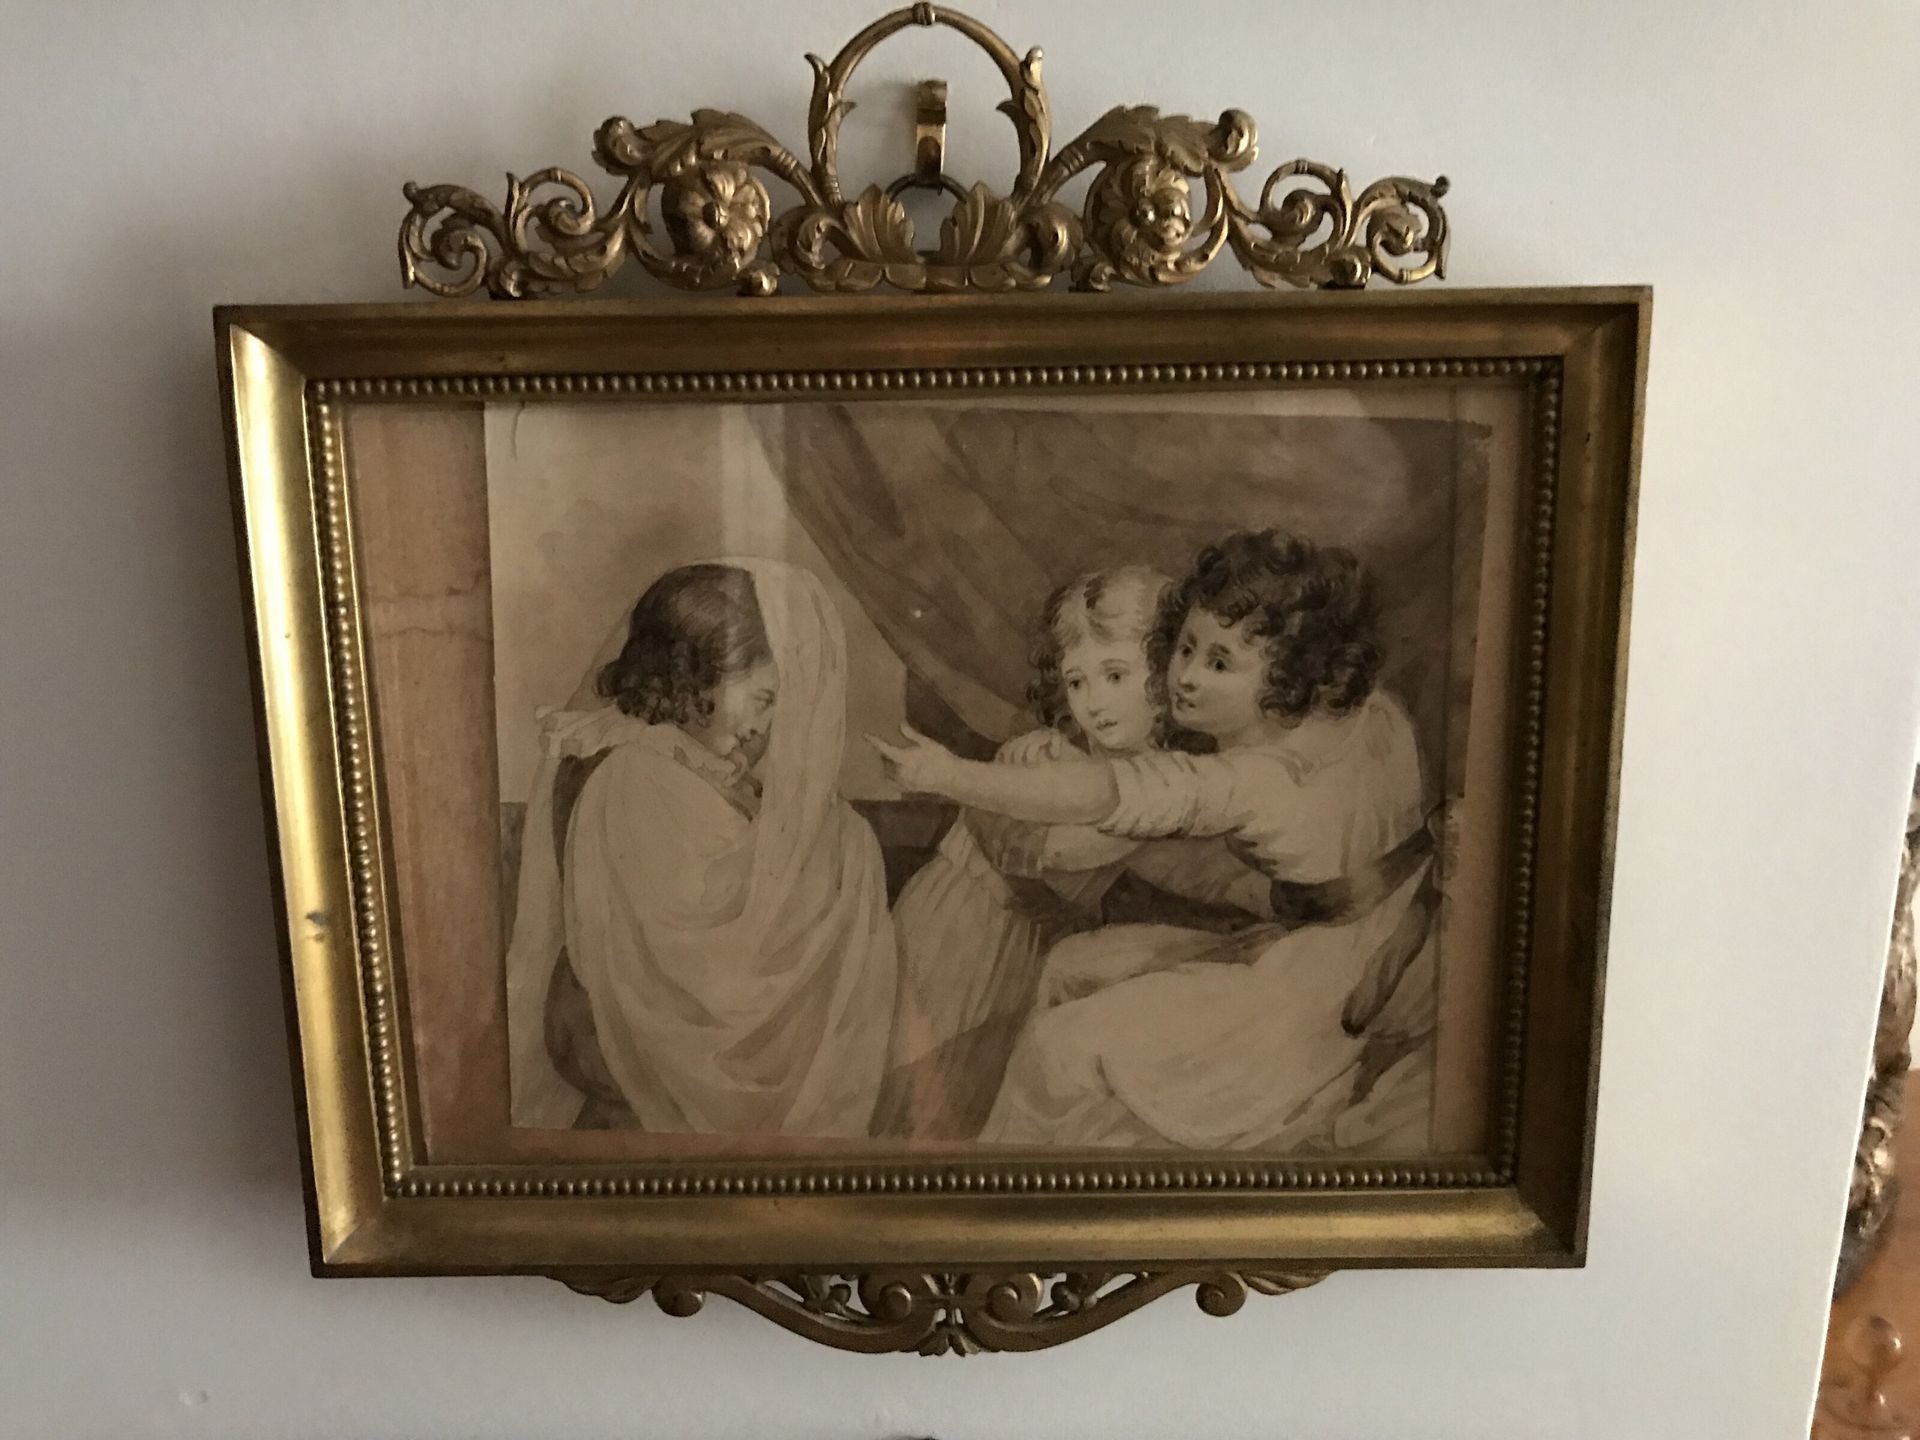 ECOLE FRANCAISE DU XIXème siècle 
儿童玩耍
水墨画
铜框内有卷轴装饰。